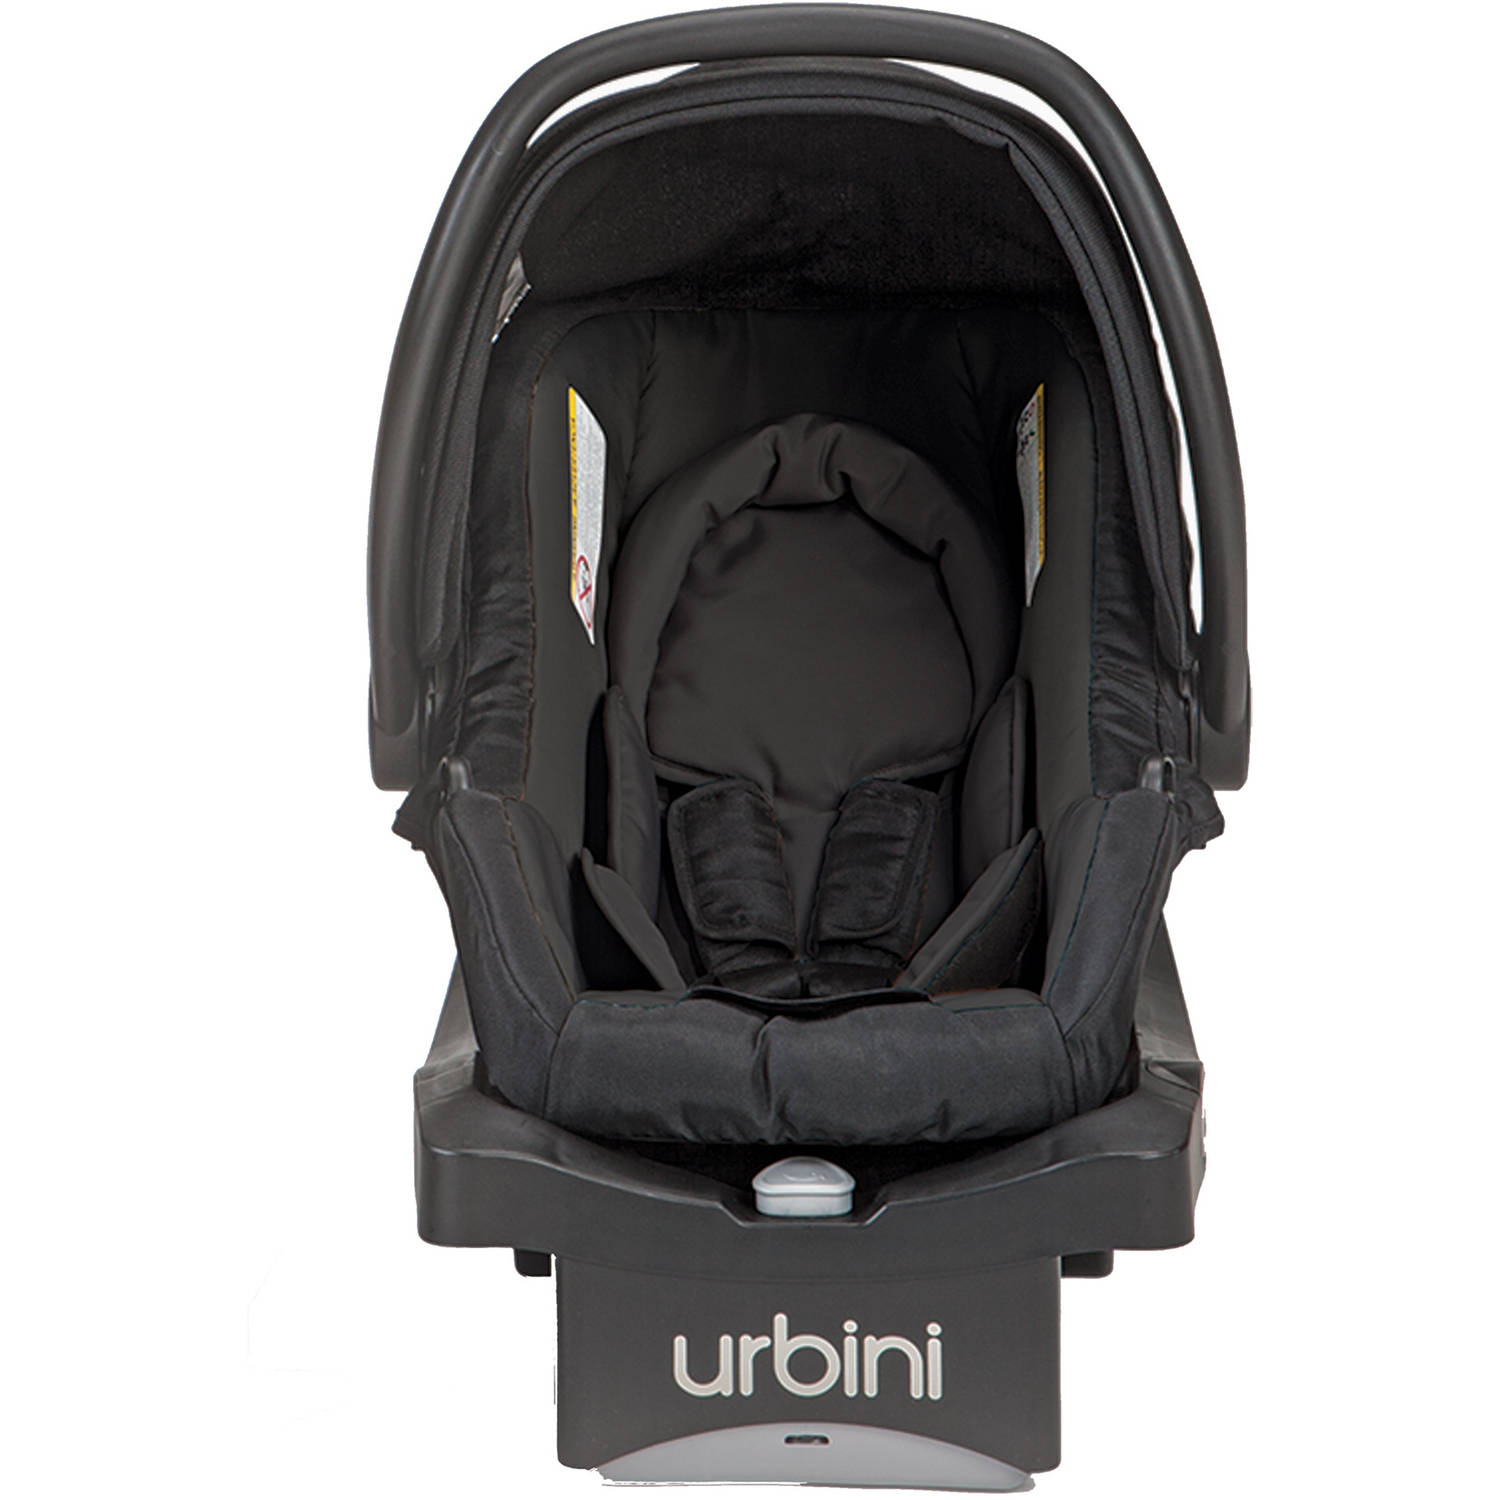 Urbini Sonti Infant Car Seat, Black - image 1 of 4